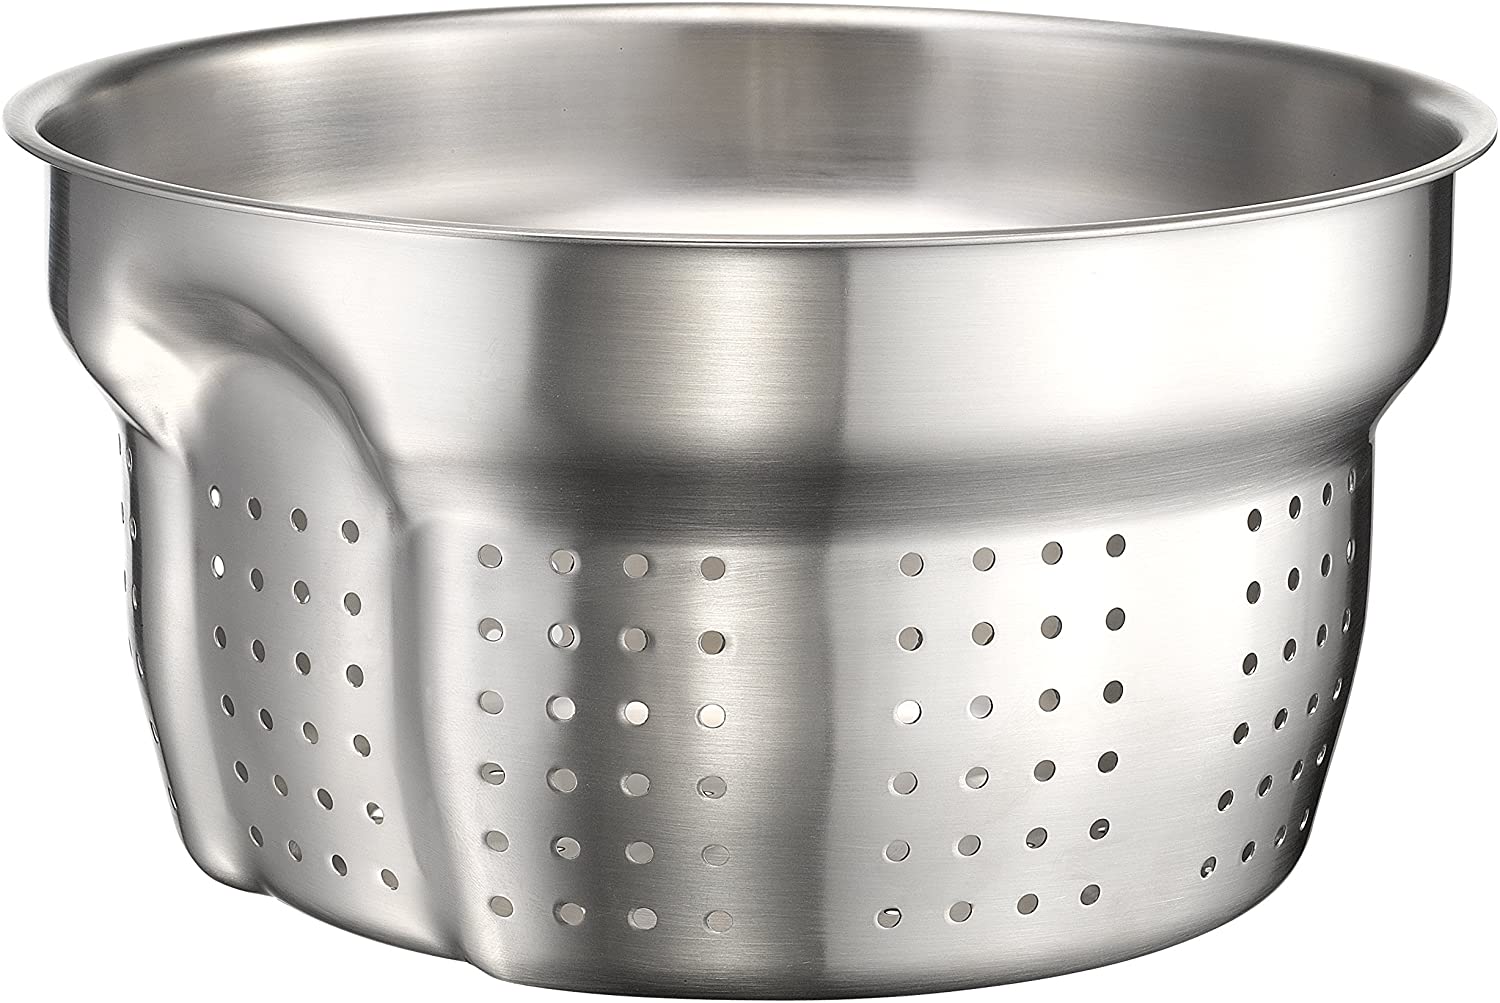 Tefal Ingenio Stainless Steel Saucepans - Silver